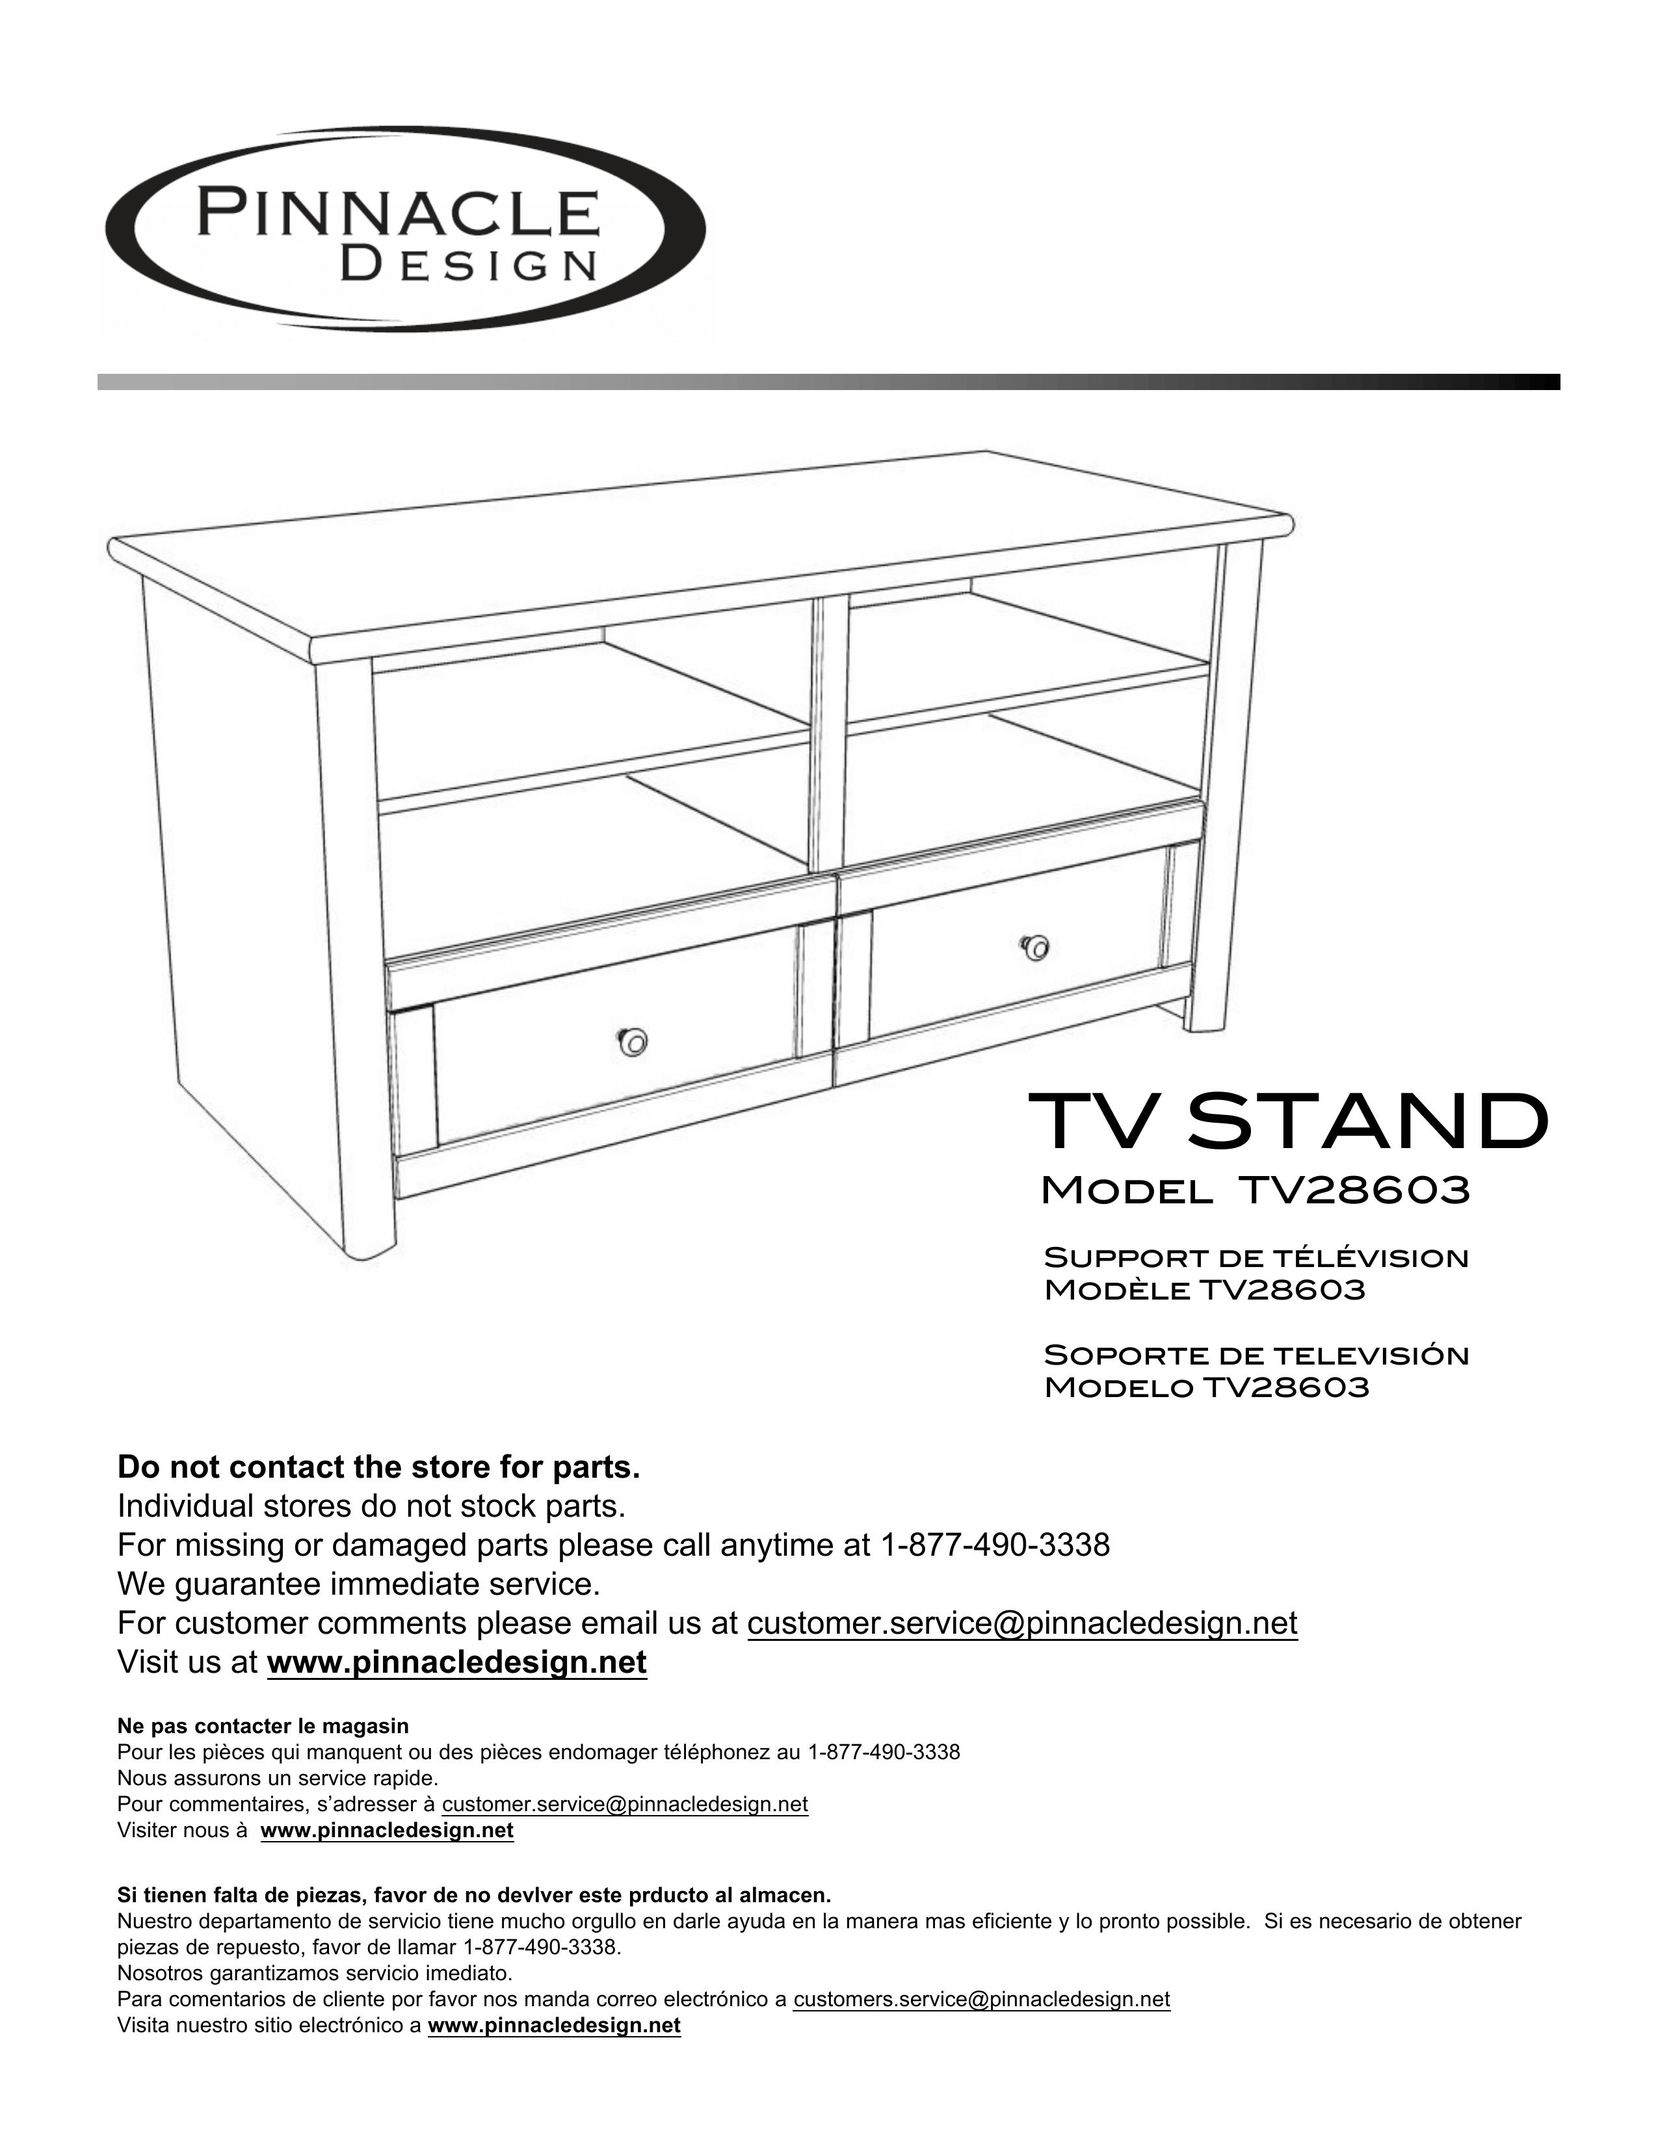 Pinnacle Design TV28603 TV Video Accessories User Manual